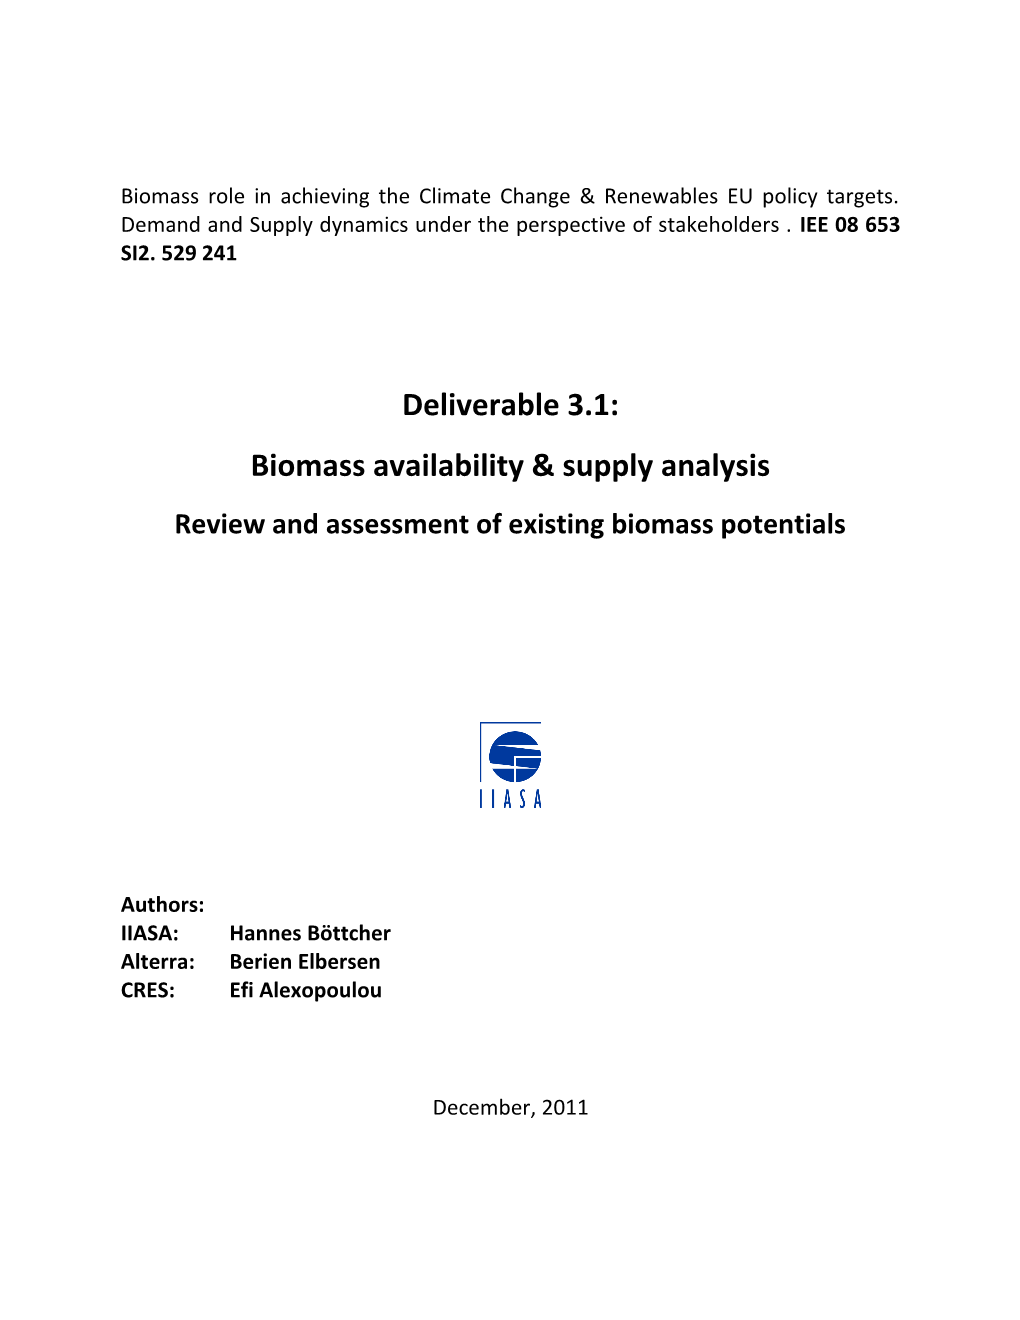 Biomass Availability & Supply Analysis